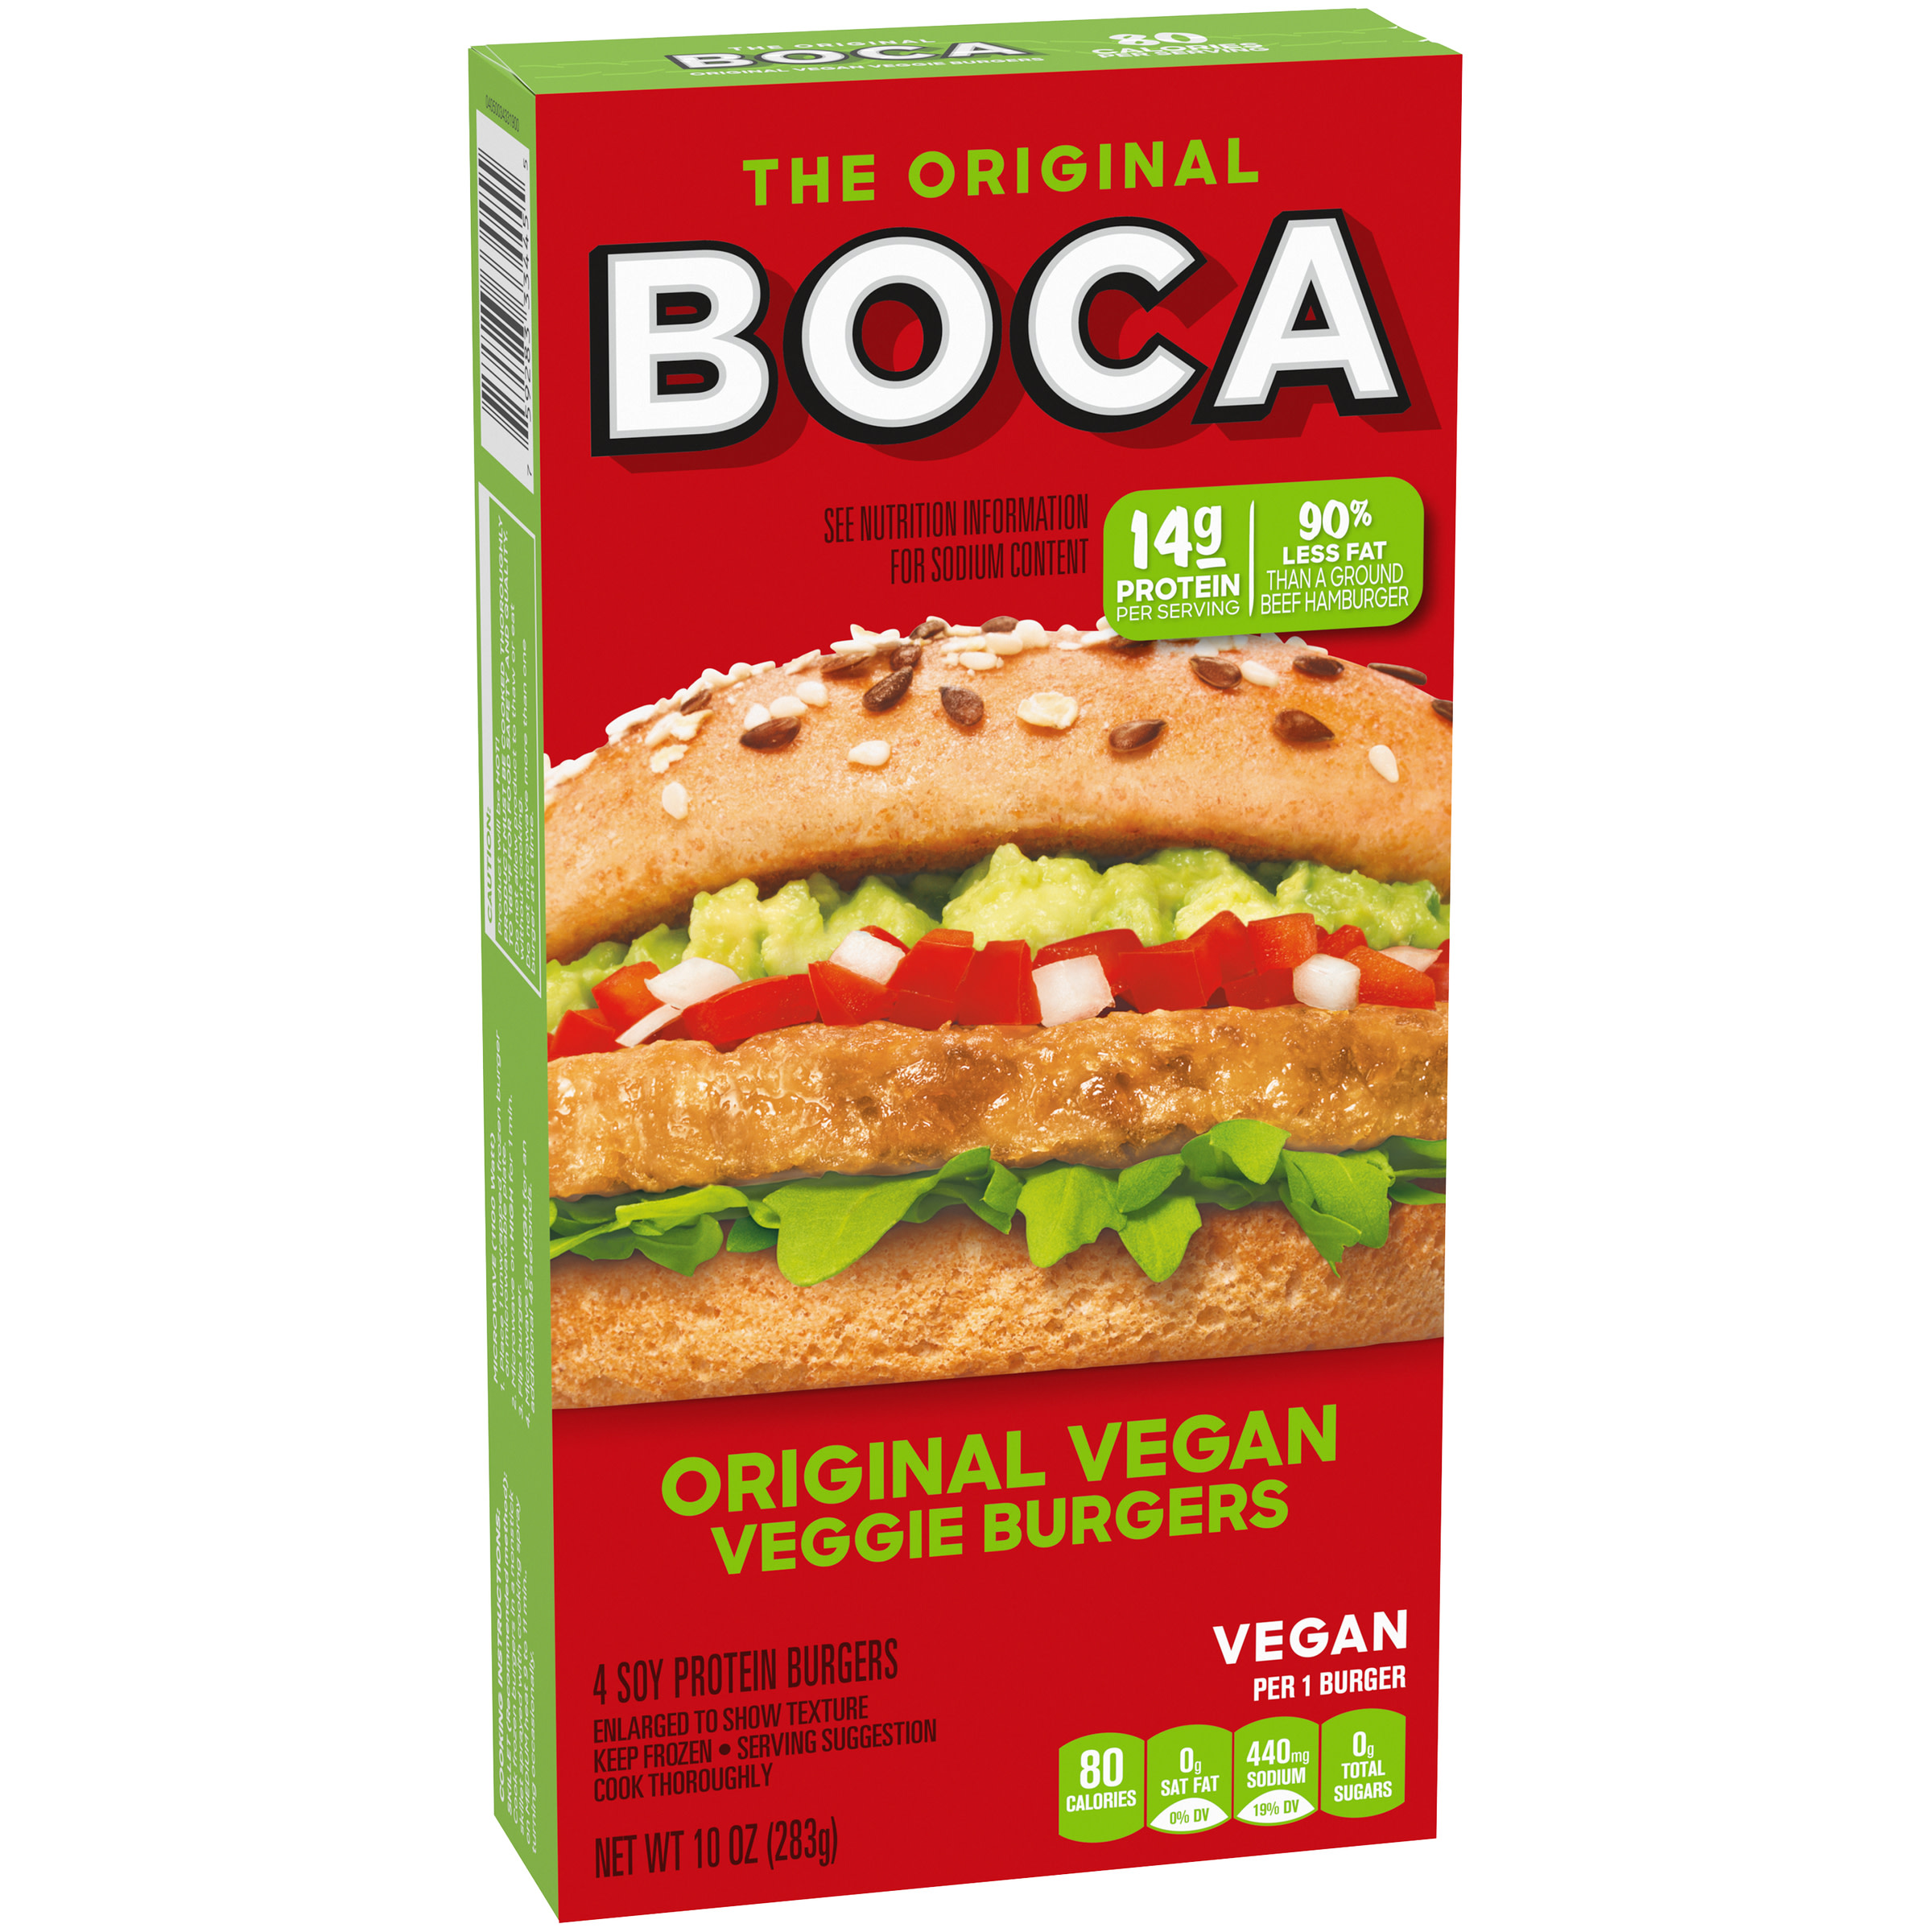 BOCA Original Vegan Veggie Burgers, 4 ct Box - image 11 of 16